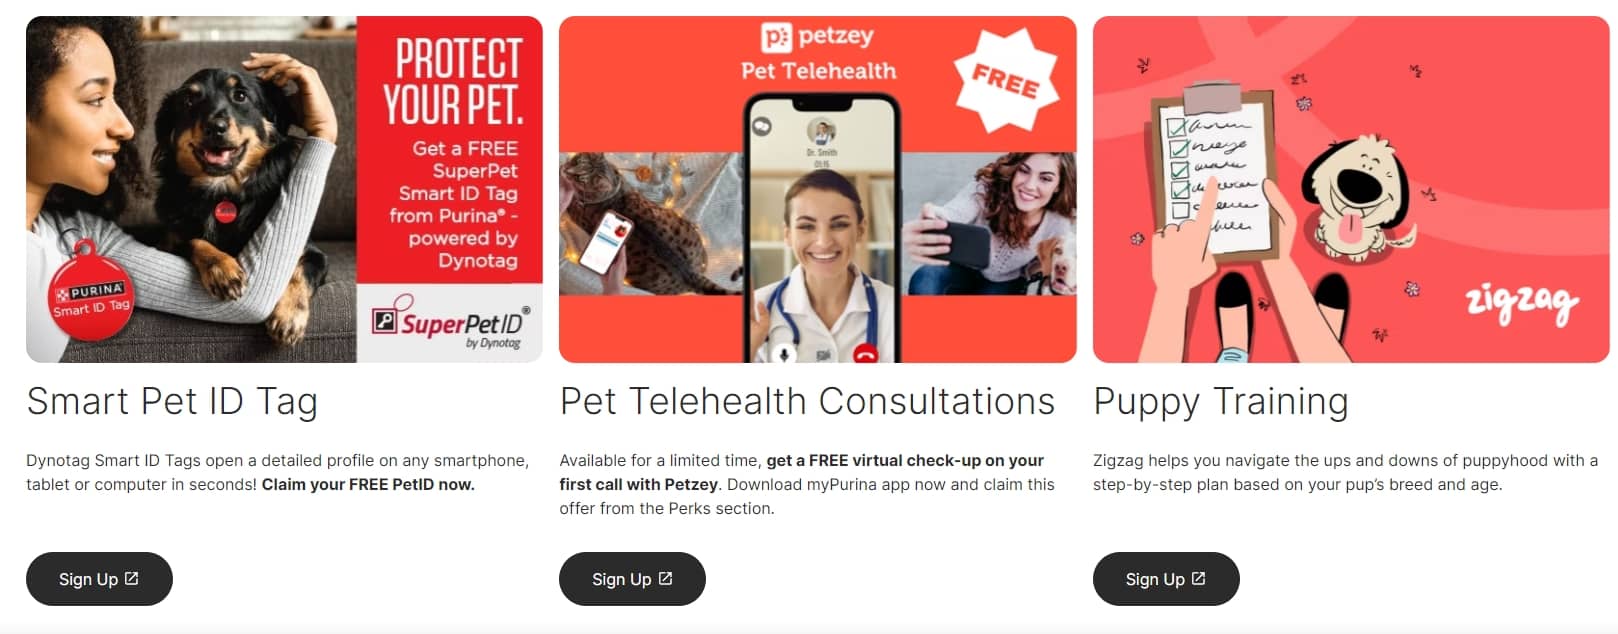 Virtual Pet Check Up with Petzey from Purina closetsamples